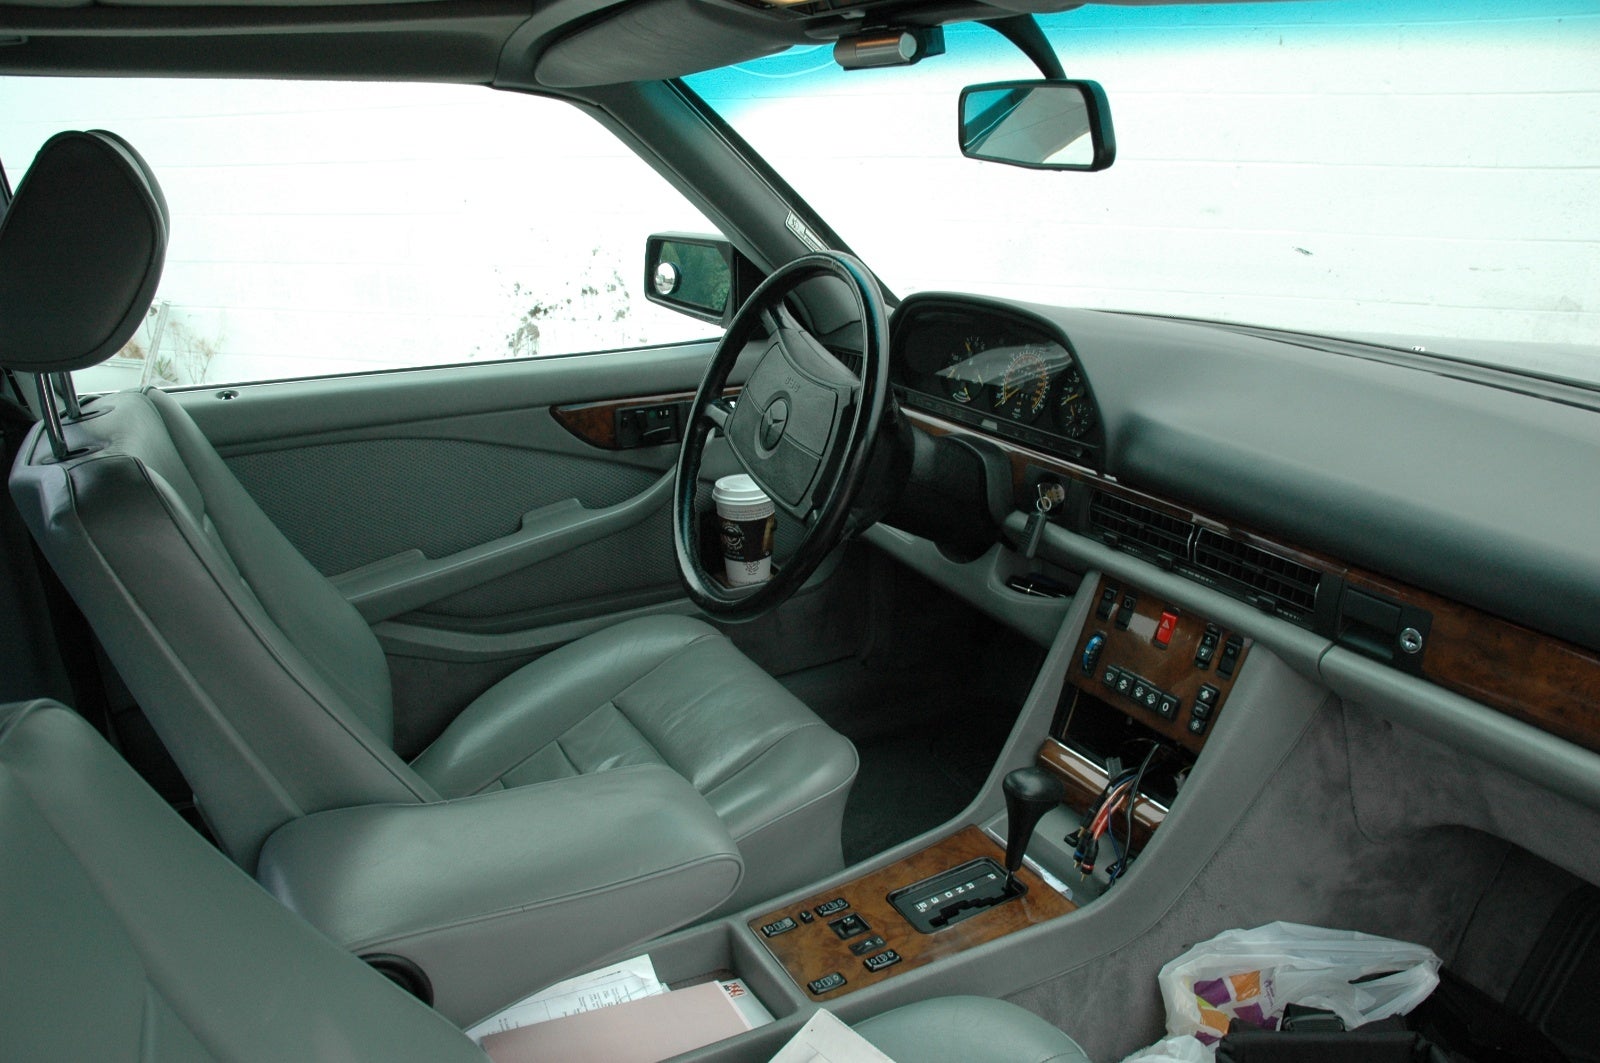 07 Chrysler 300 consumer reviews #5